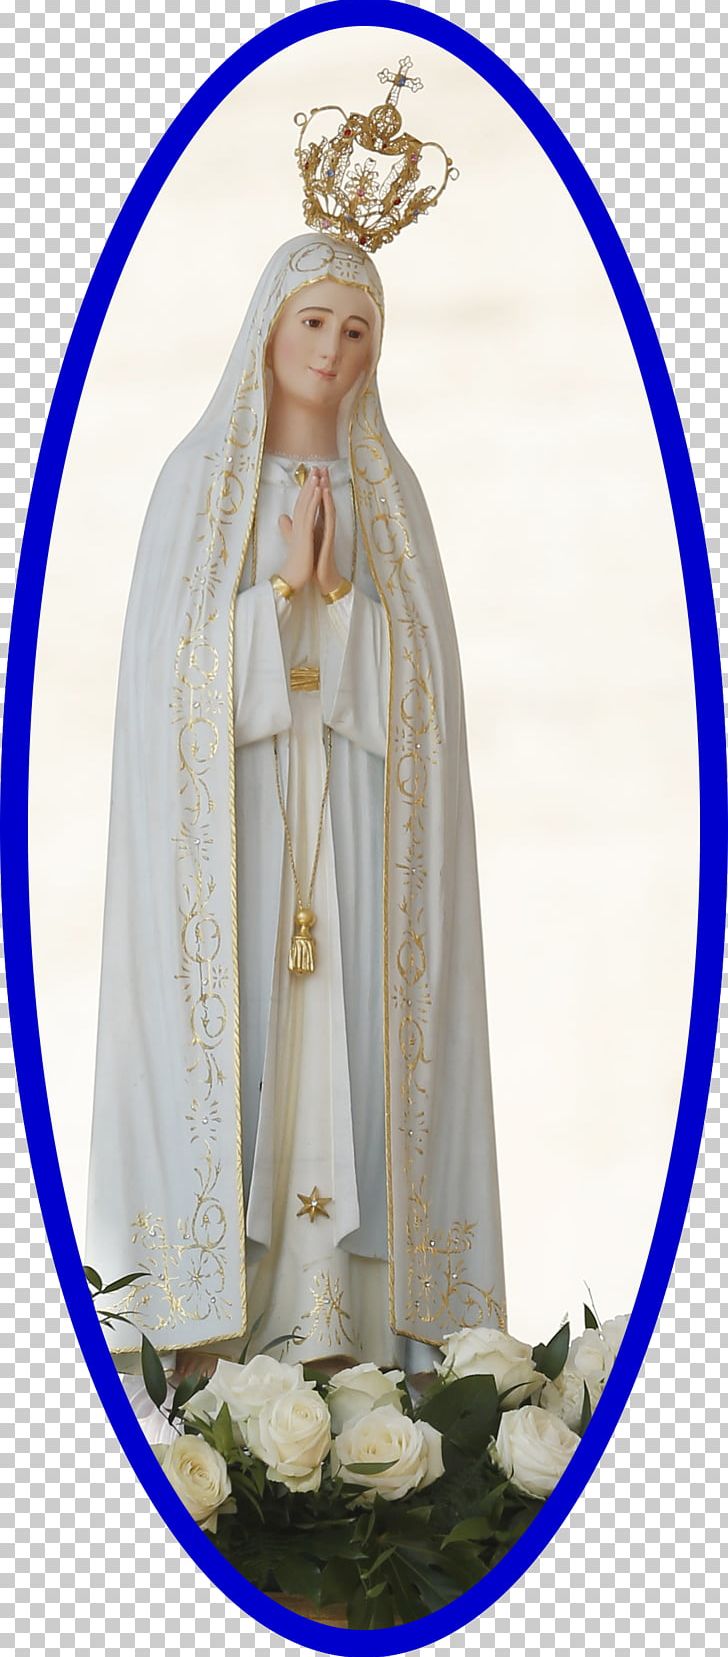 Mary Sanctuary Of Fátima Our Lady Of Fátima Apparitions Of Our Lady Of Fatima Aita Santu PNG, Clipart, Aita Santu, Cope, Costume, Costume Design, Fatima Free PNG Download